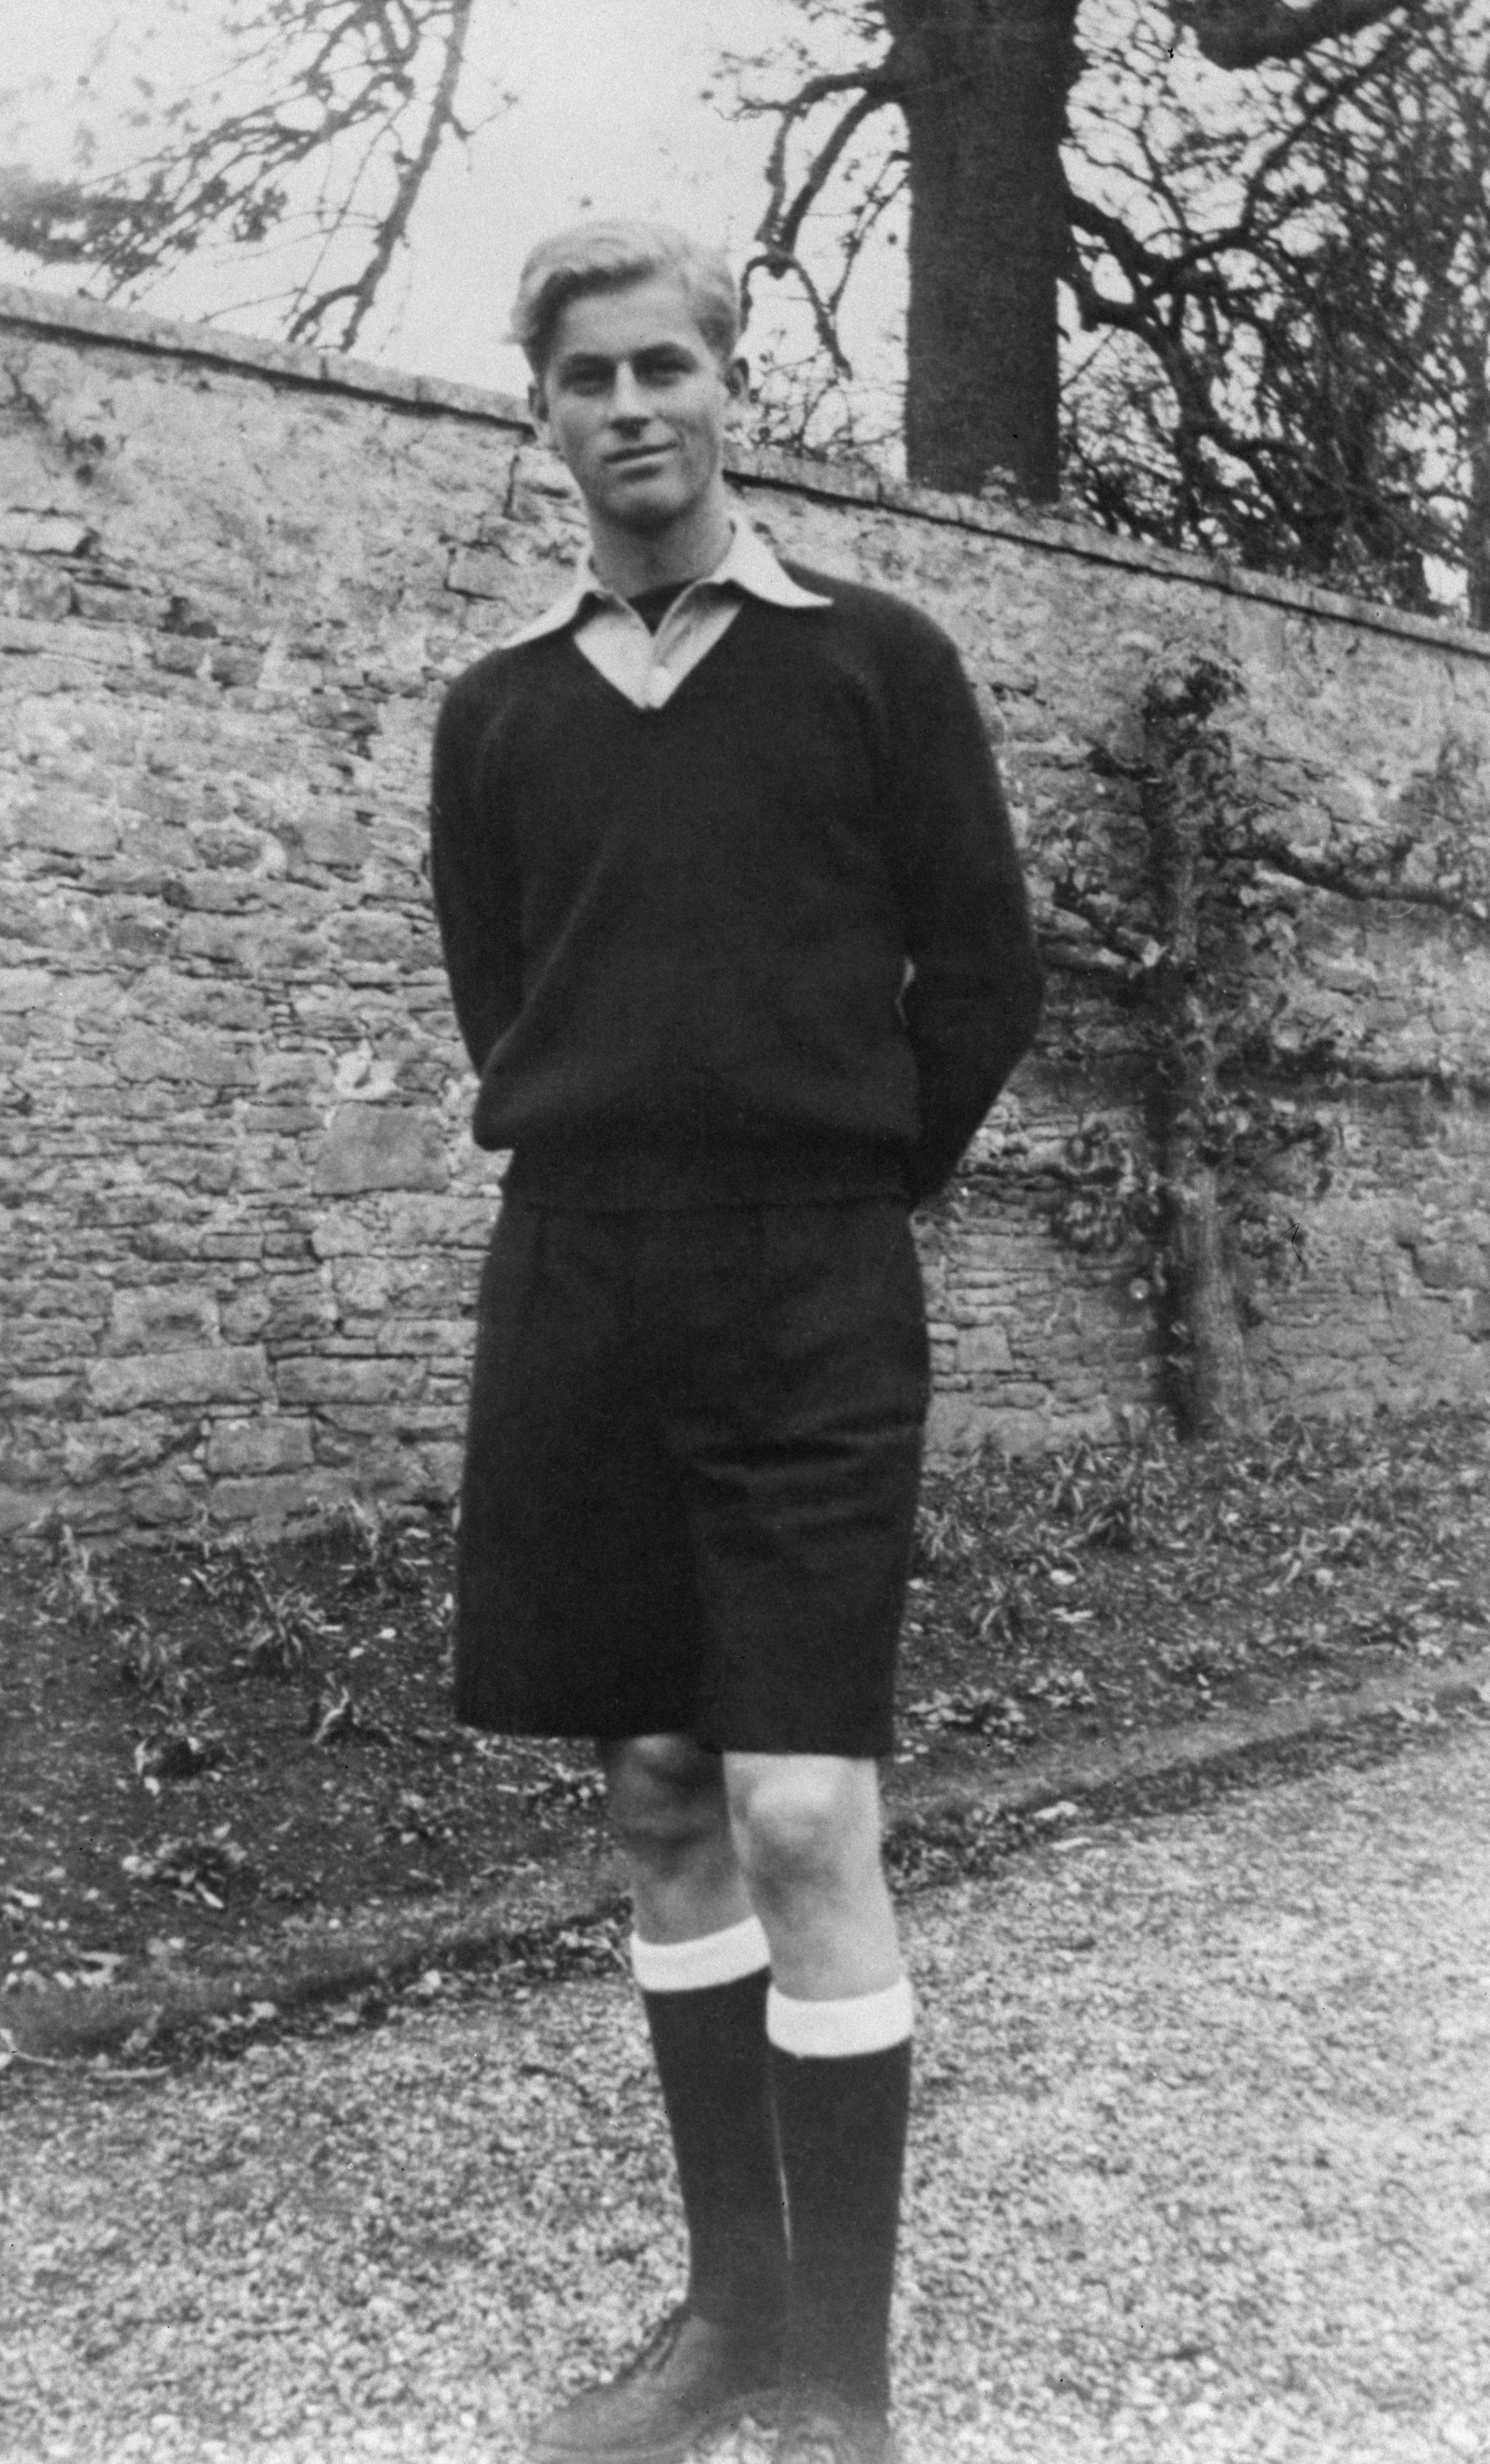 Prince Philip at Gordonstoun aged 16